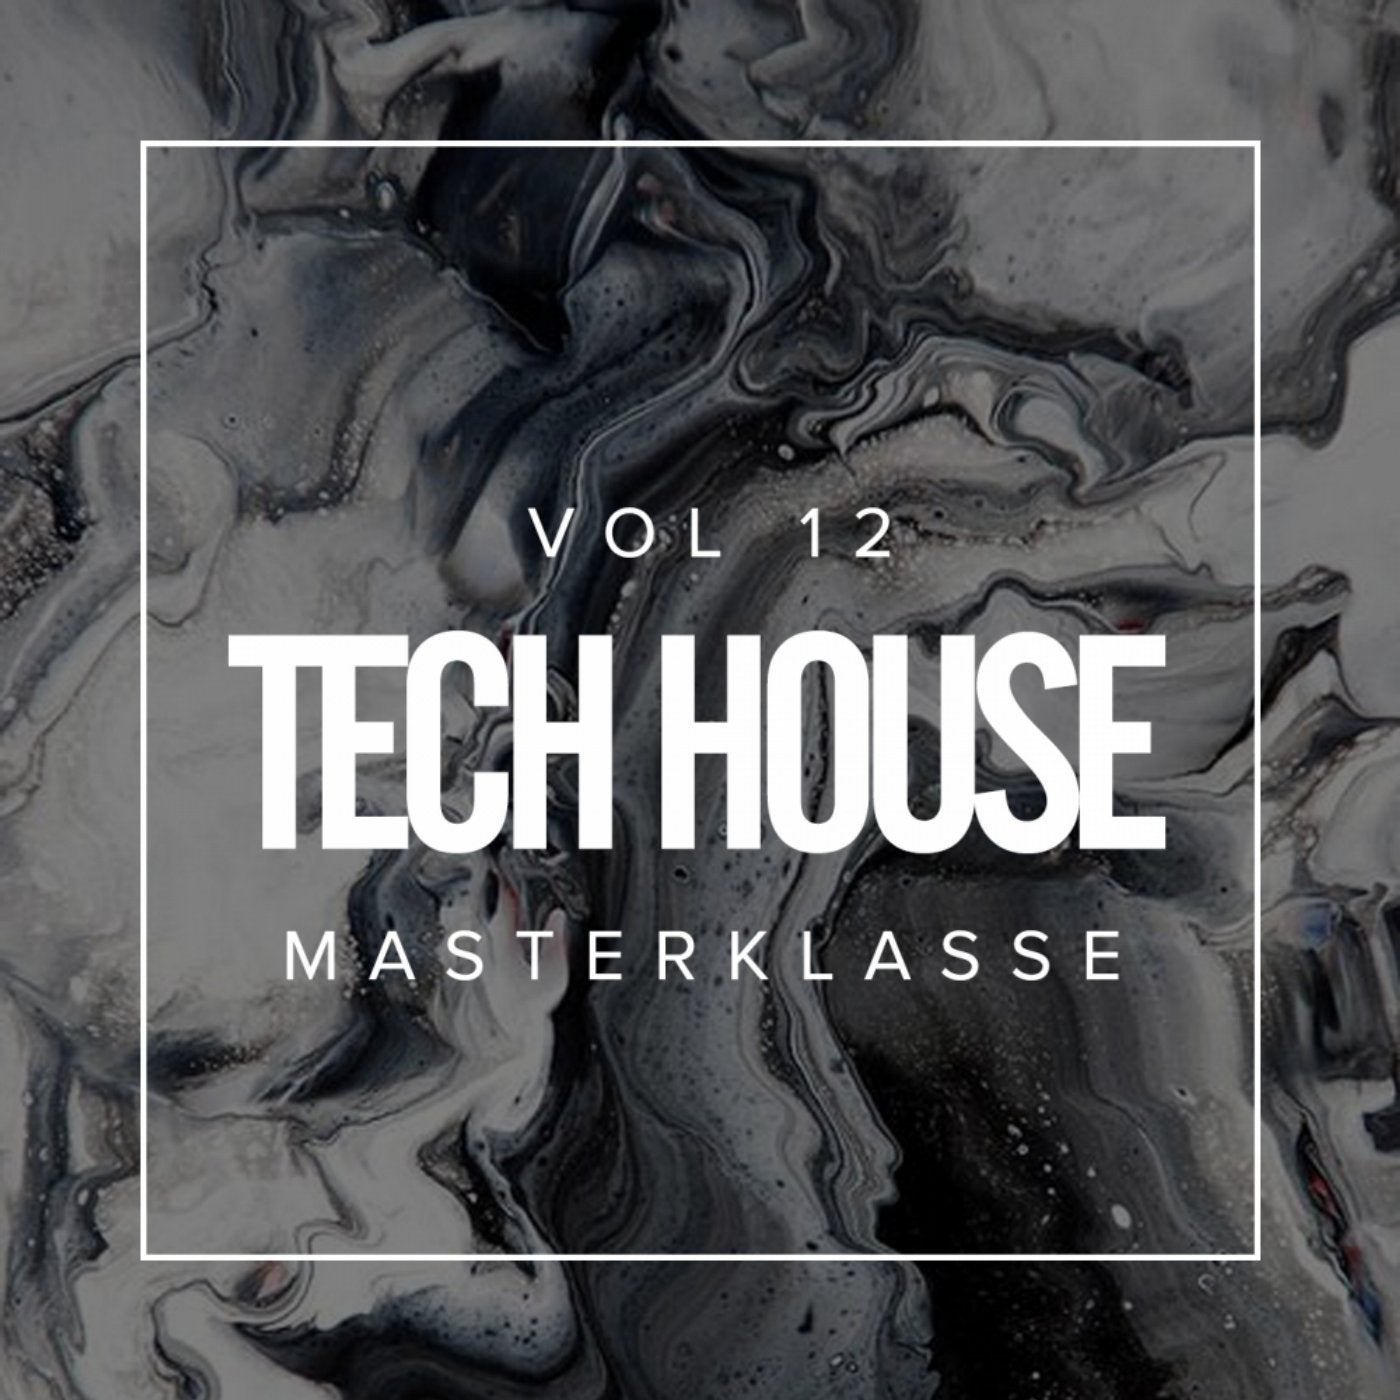 Tech House Masterklasse, Vol.12